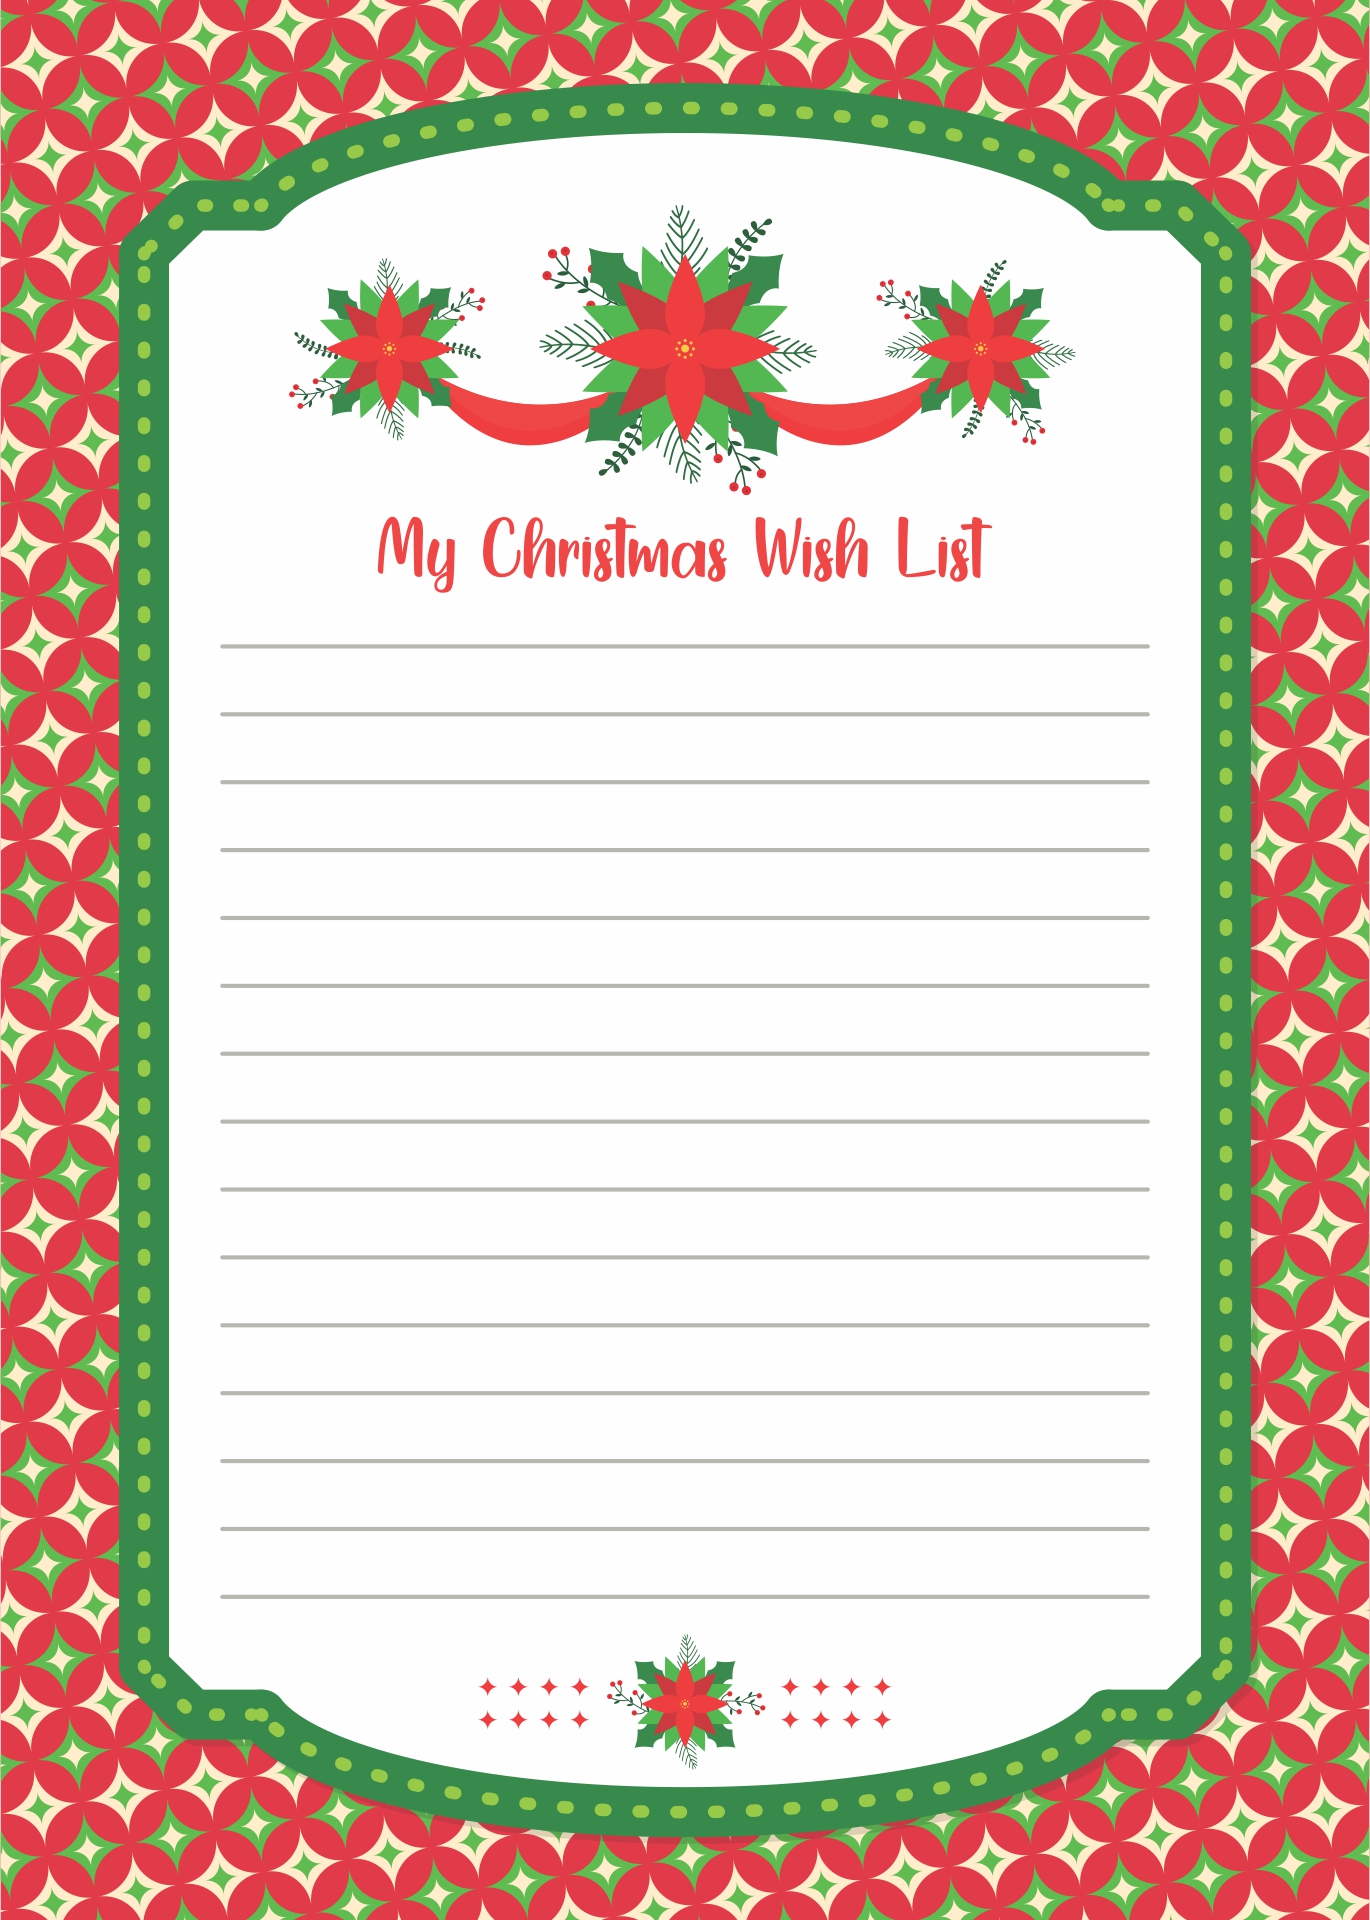 free-printable-holiday-wish-list-for-kids